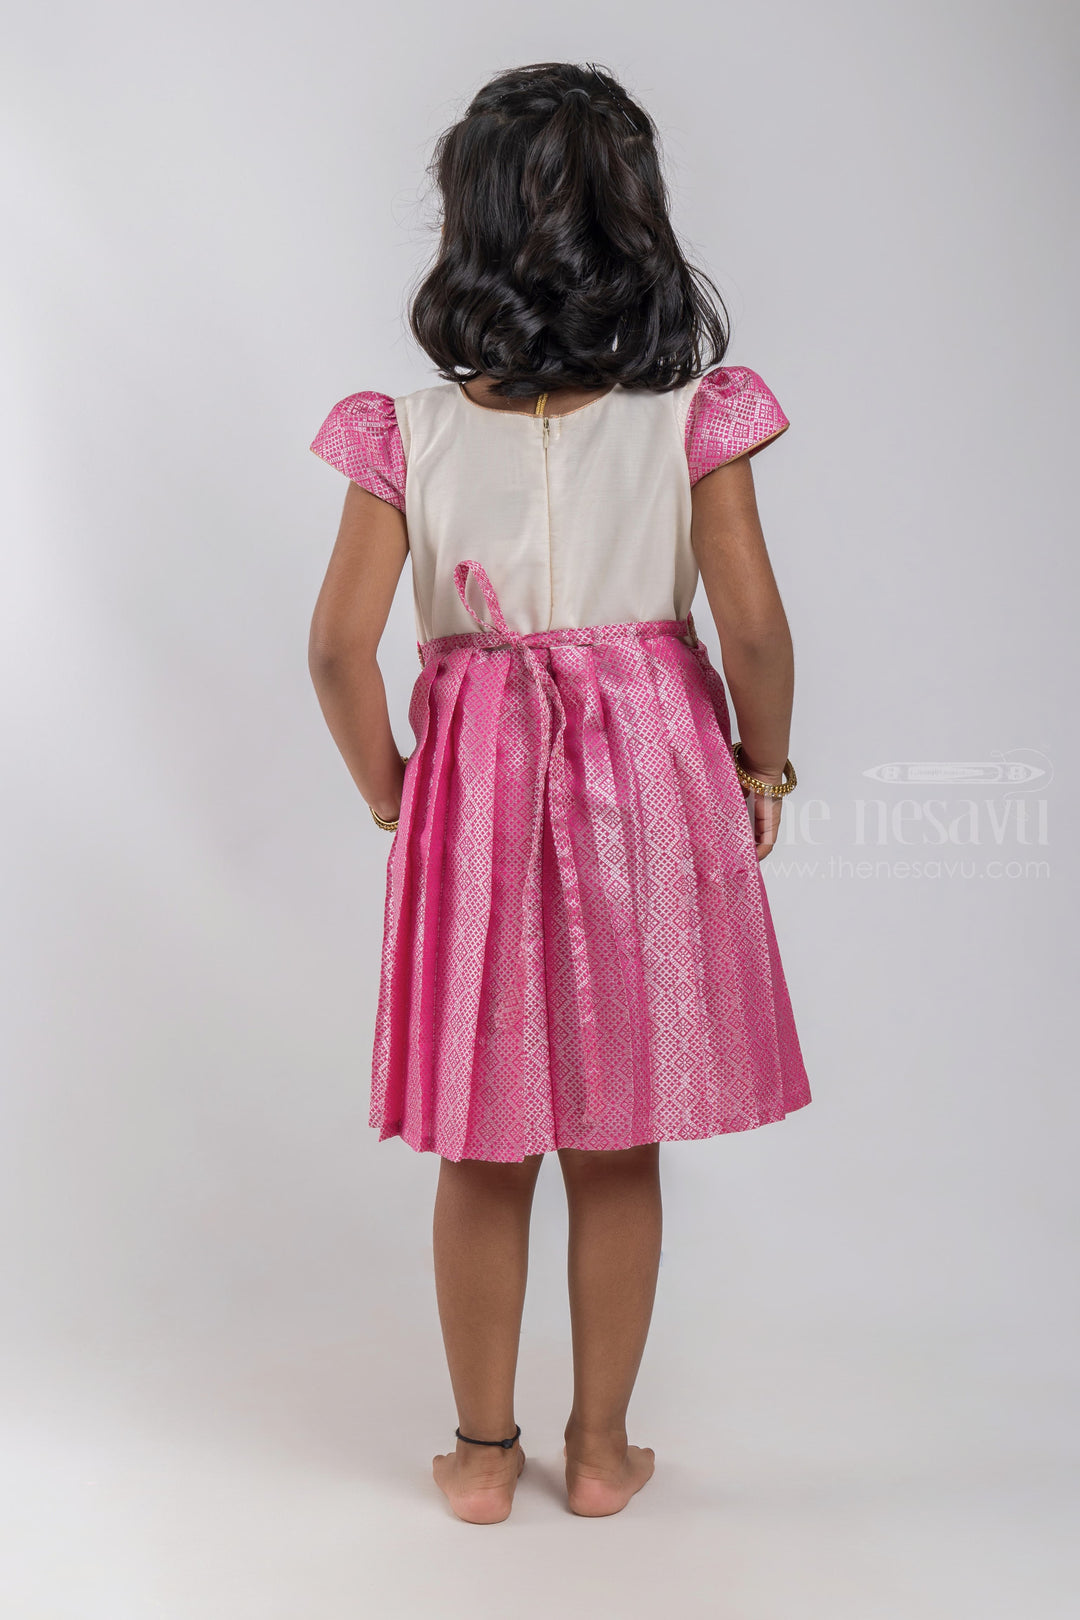 The Nesavu Silk Embroidered Frock Geometrical Designer Pink Classic Reshme Dress for Girls psr silks Nesavu